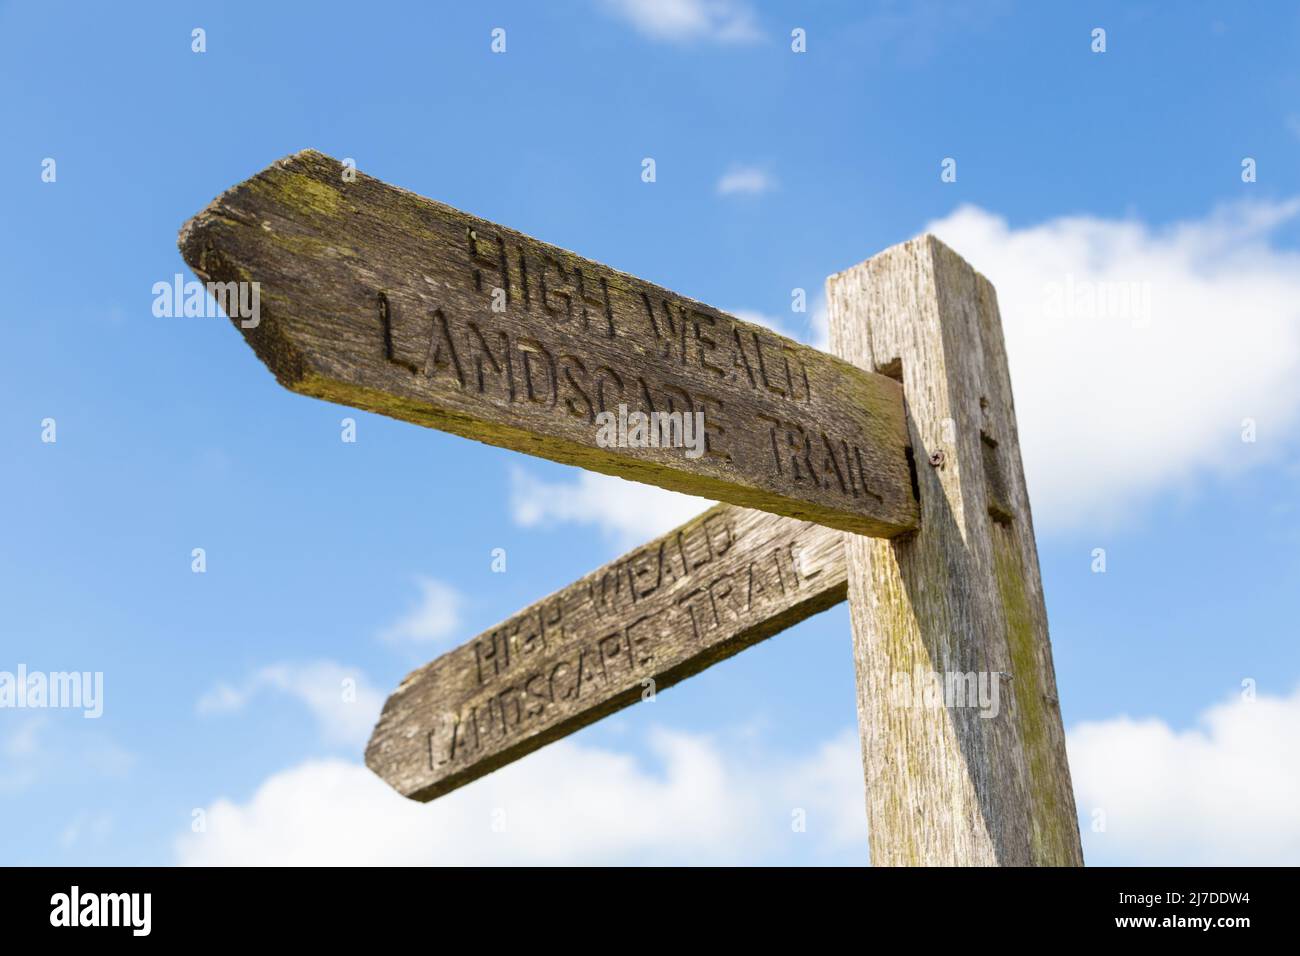 Benenden village high weald landscape trail fingerpost sign, kent, uk Stock Photo